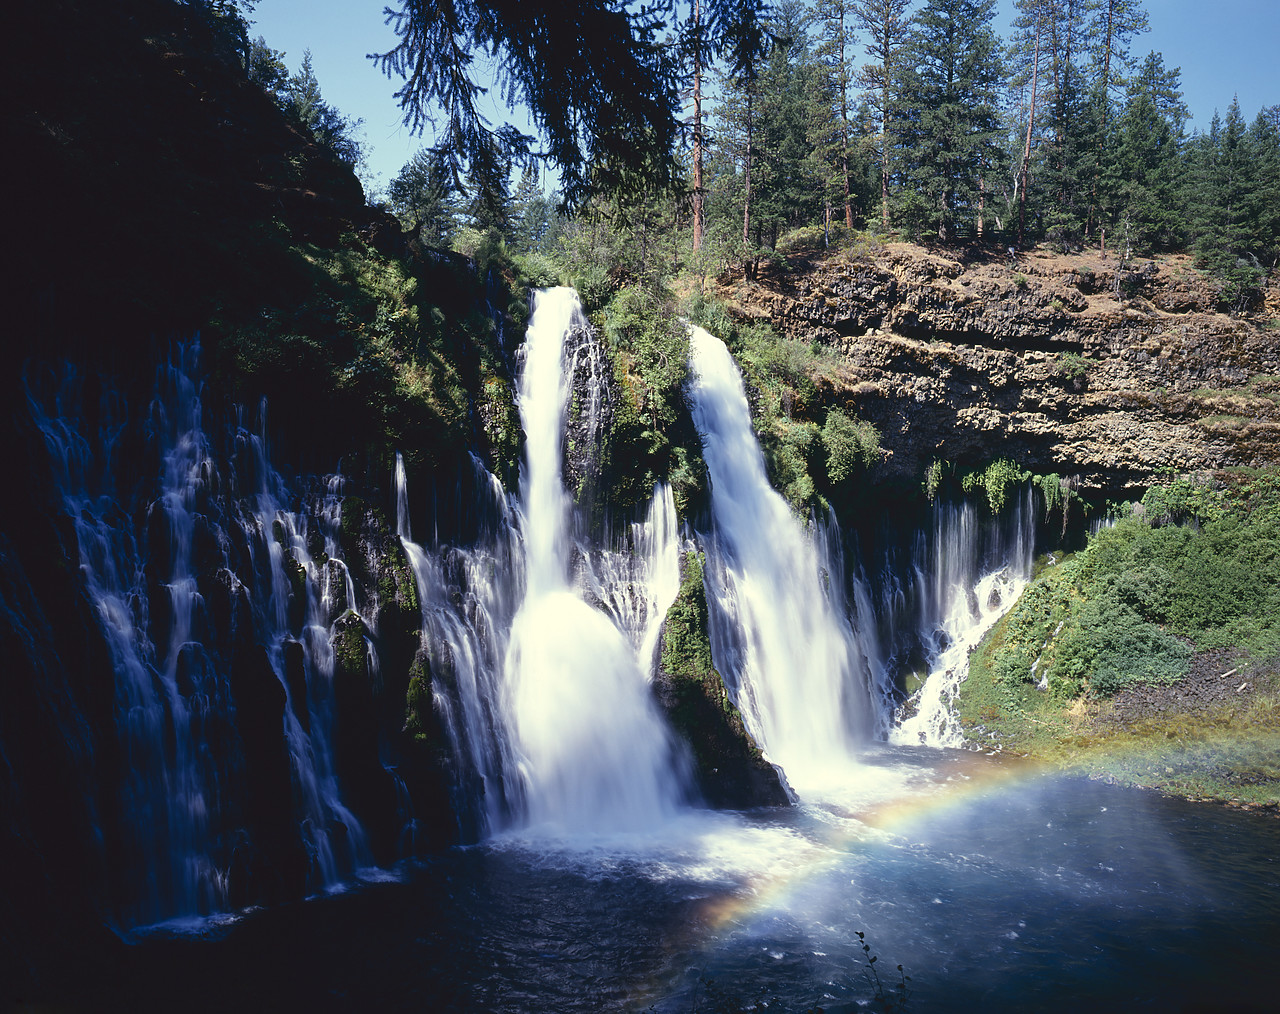 #83158-1 - Burney Falls with Rainbow, MacArhur-Burney State Park, California, USA